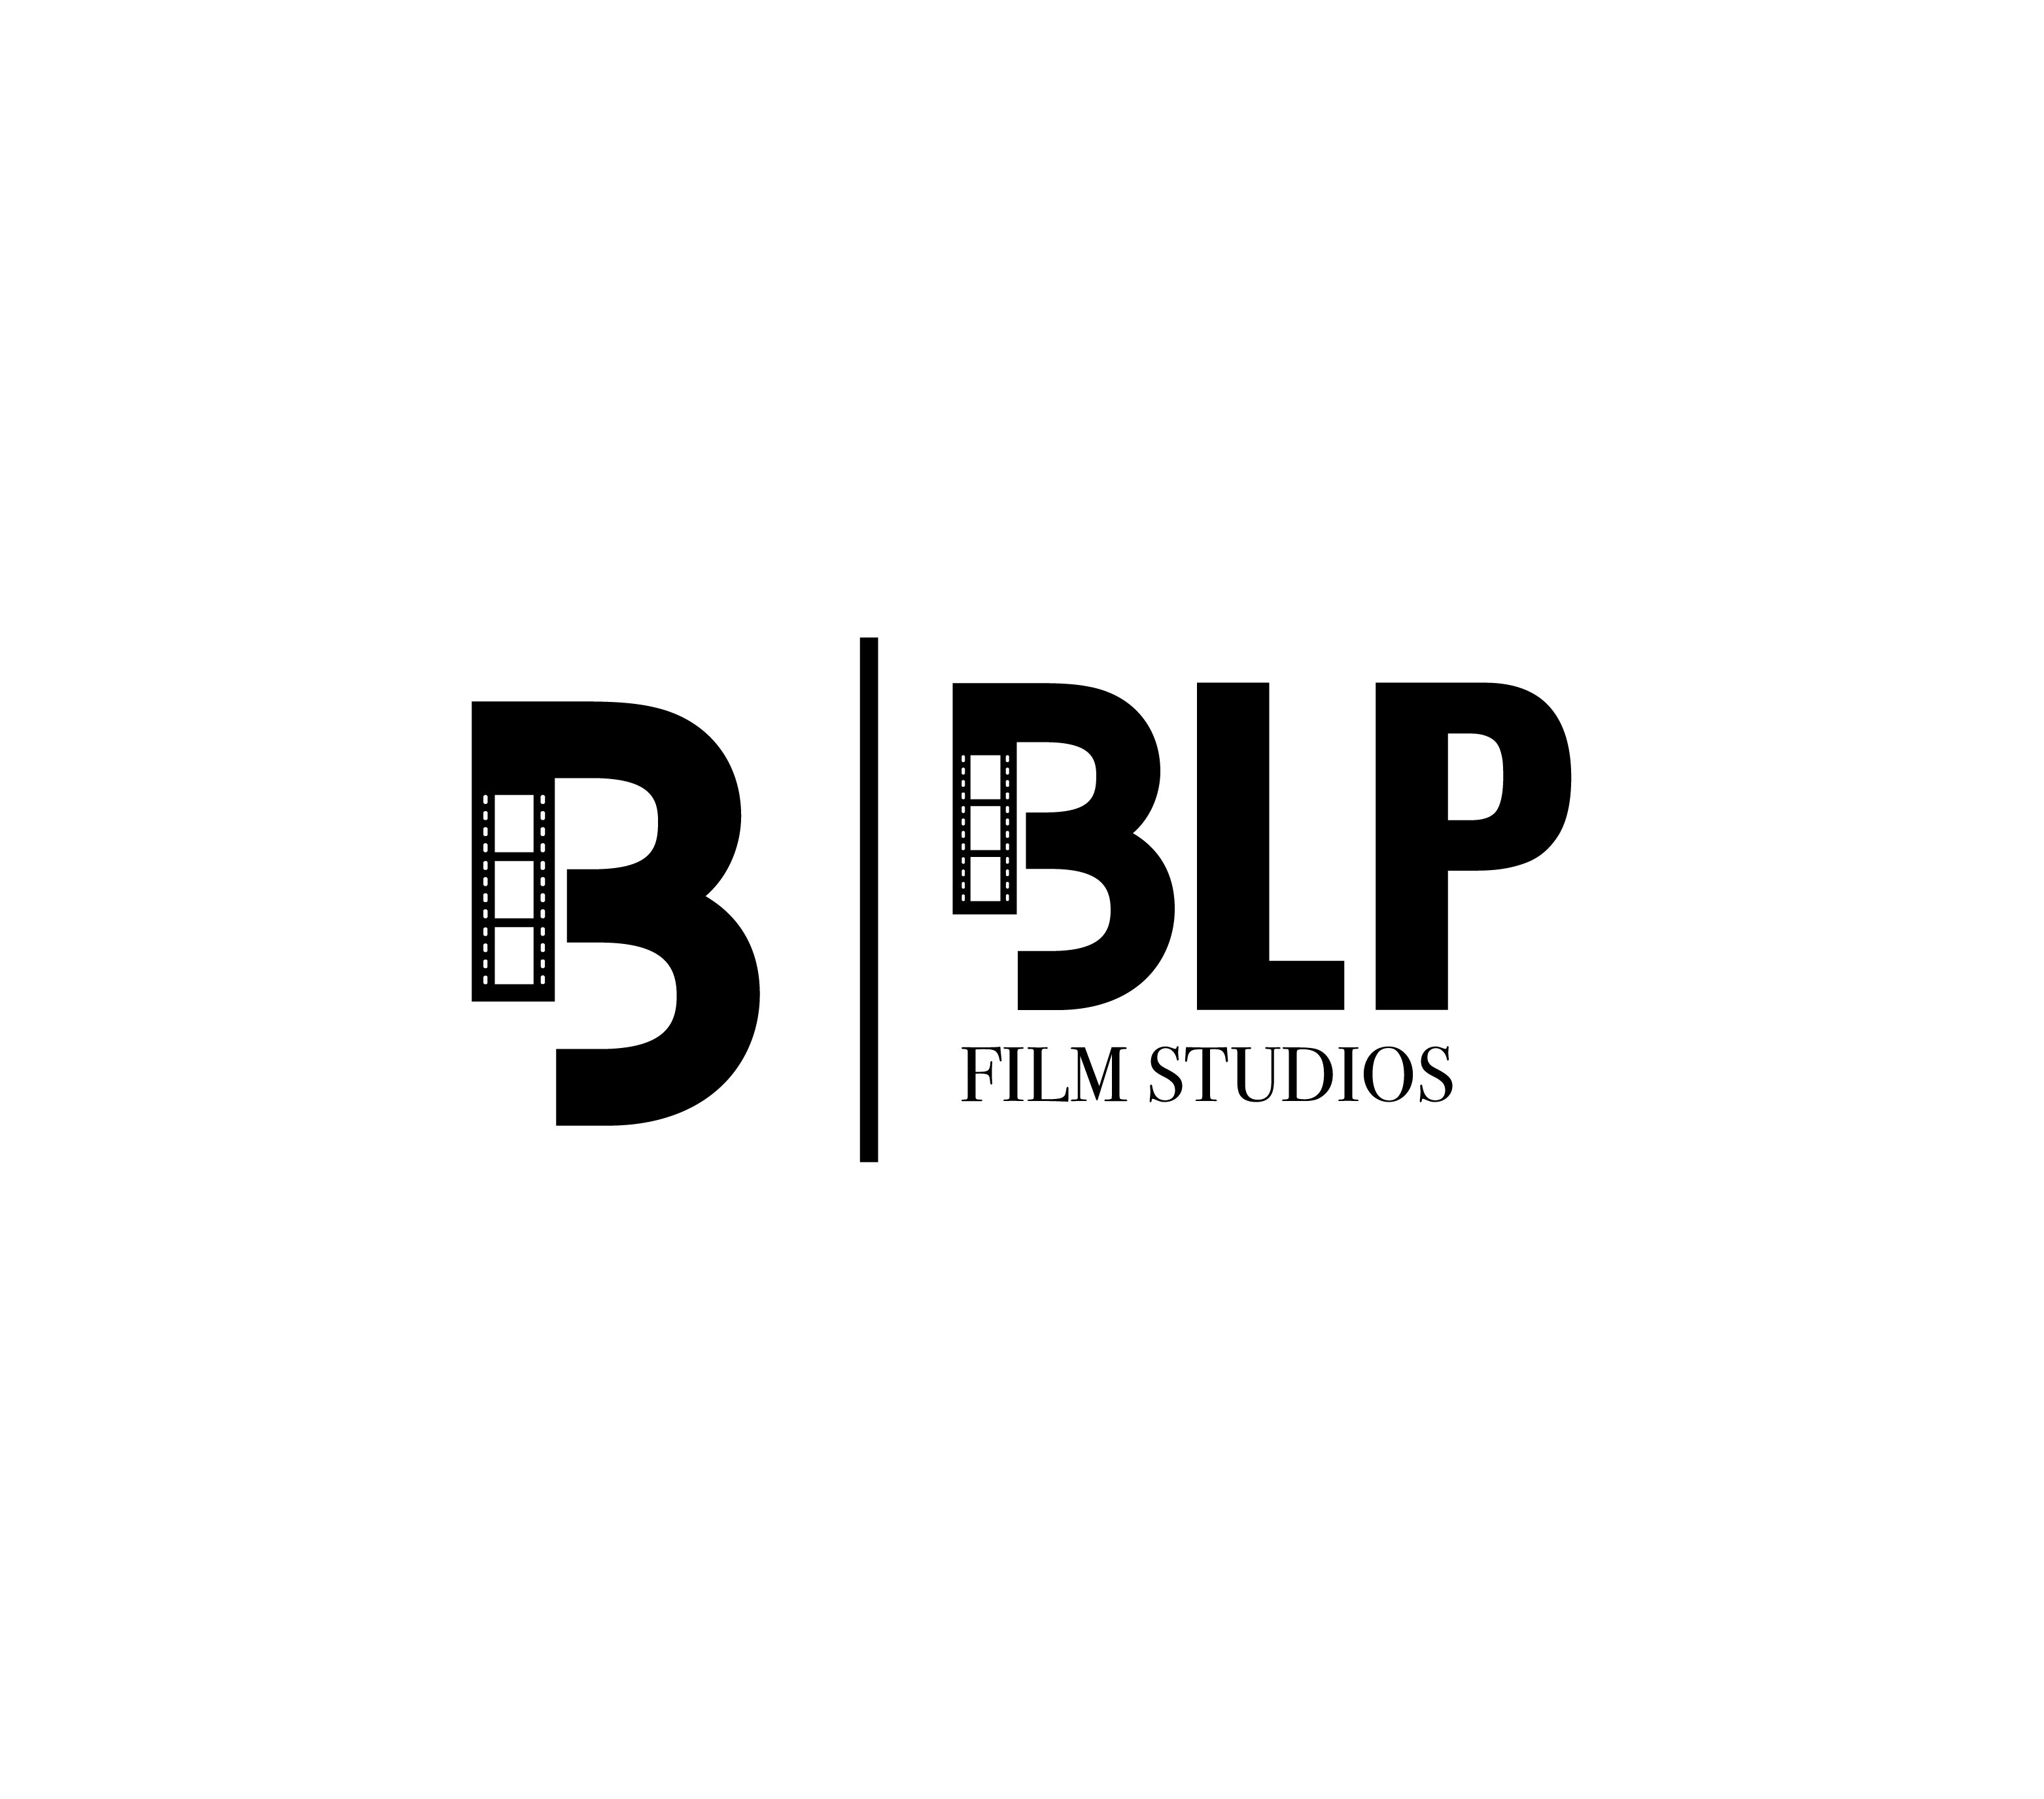 Black Lens Productions Film Studios logo